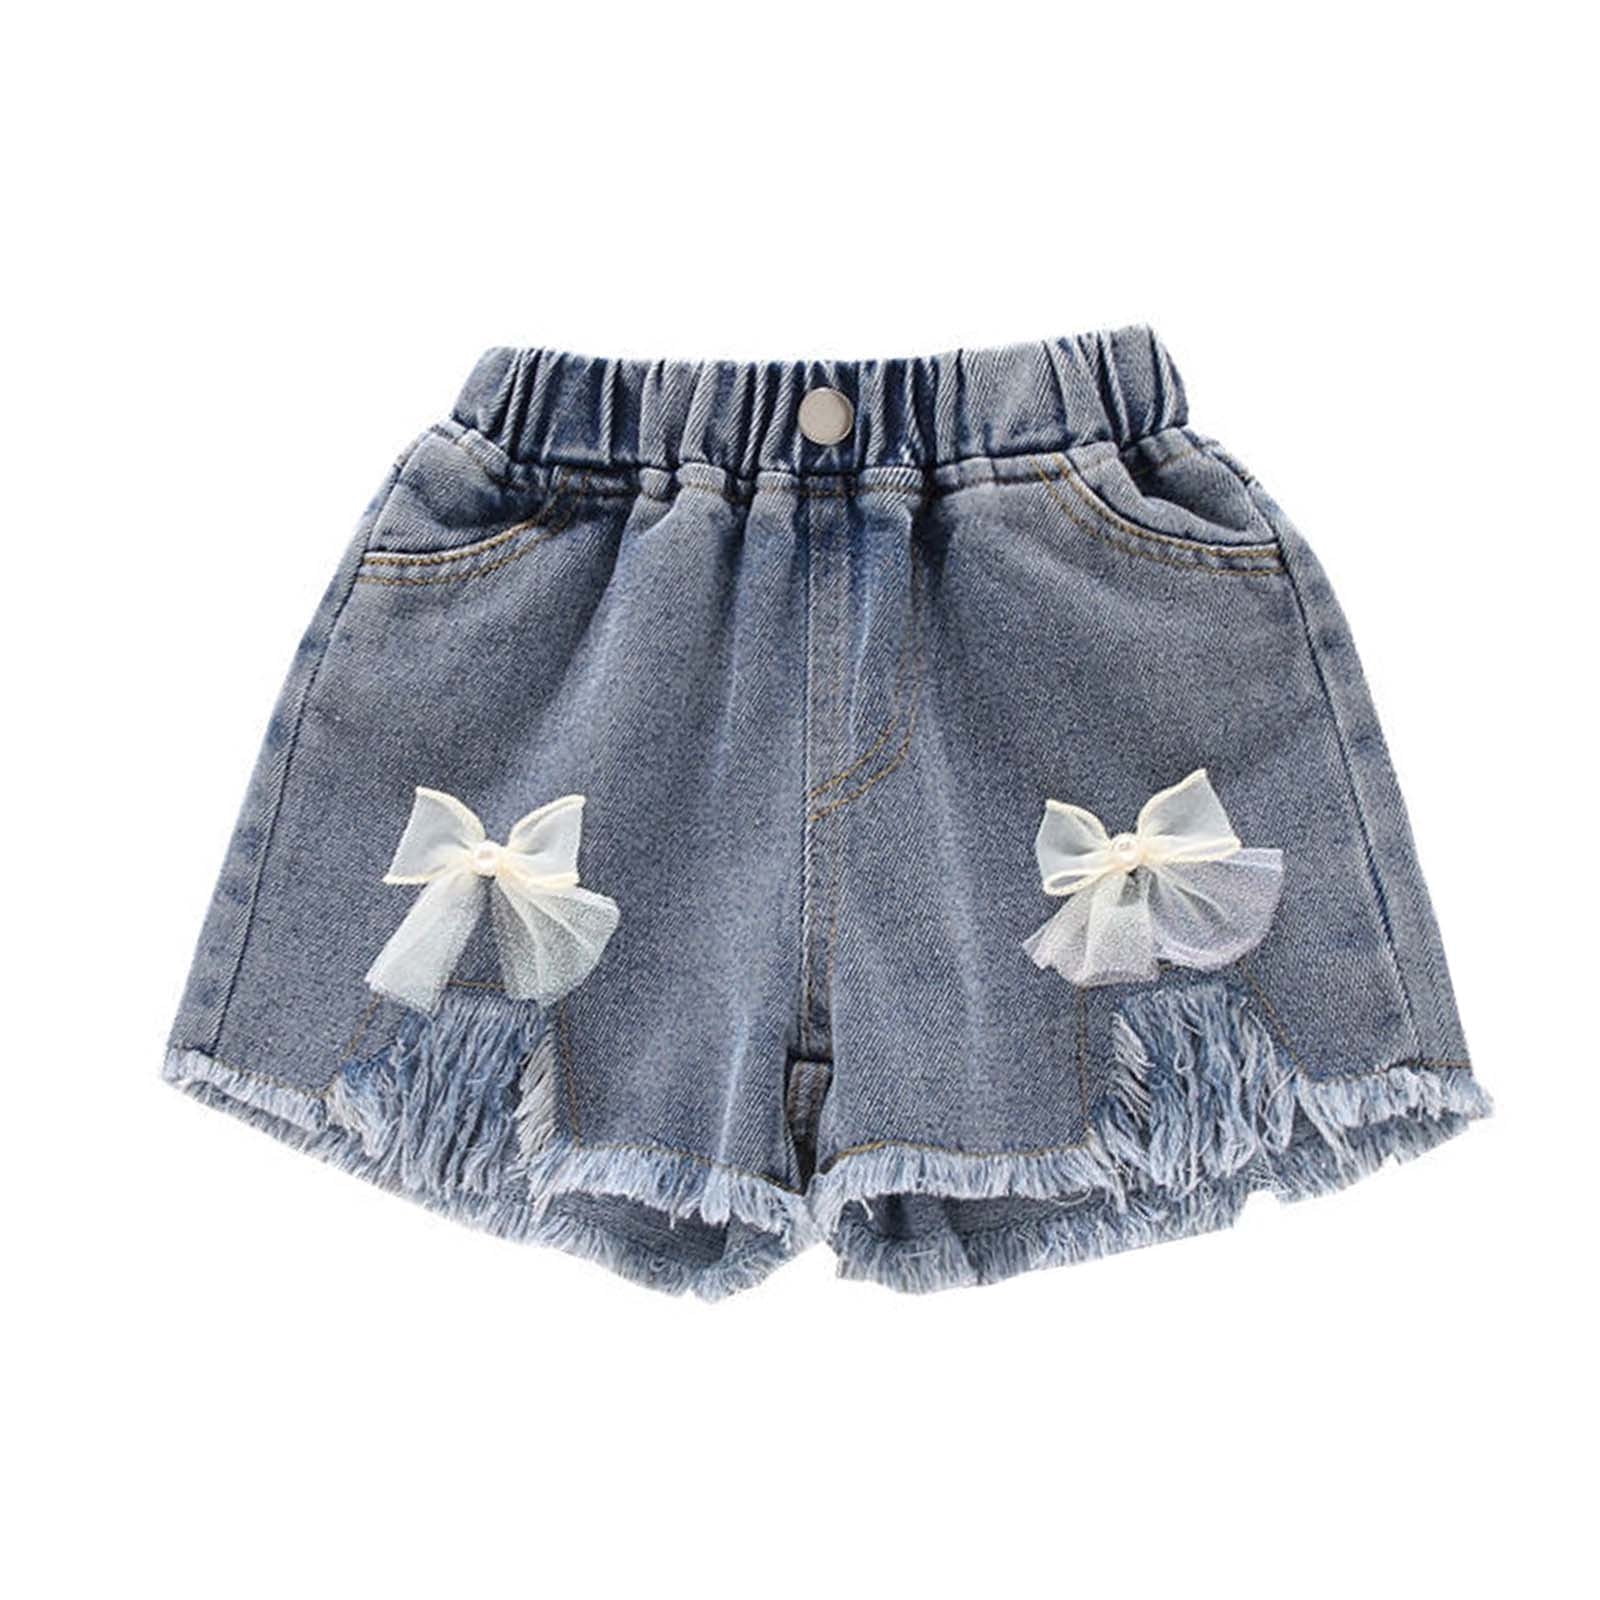 VIGOSS Girls' Jean Shorts - Casual Pull-On Knit Waist Bermuda Jean Shorts  for Girls (2T-16) 